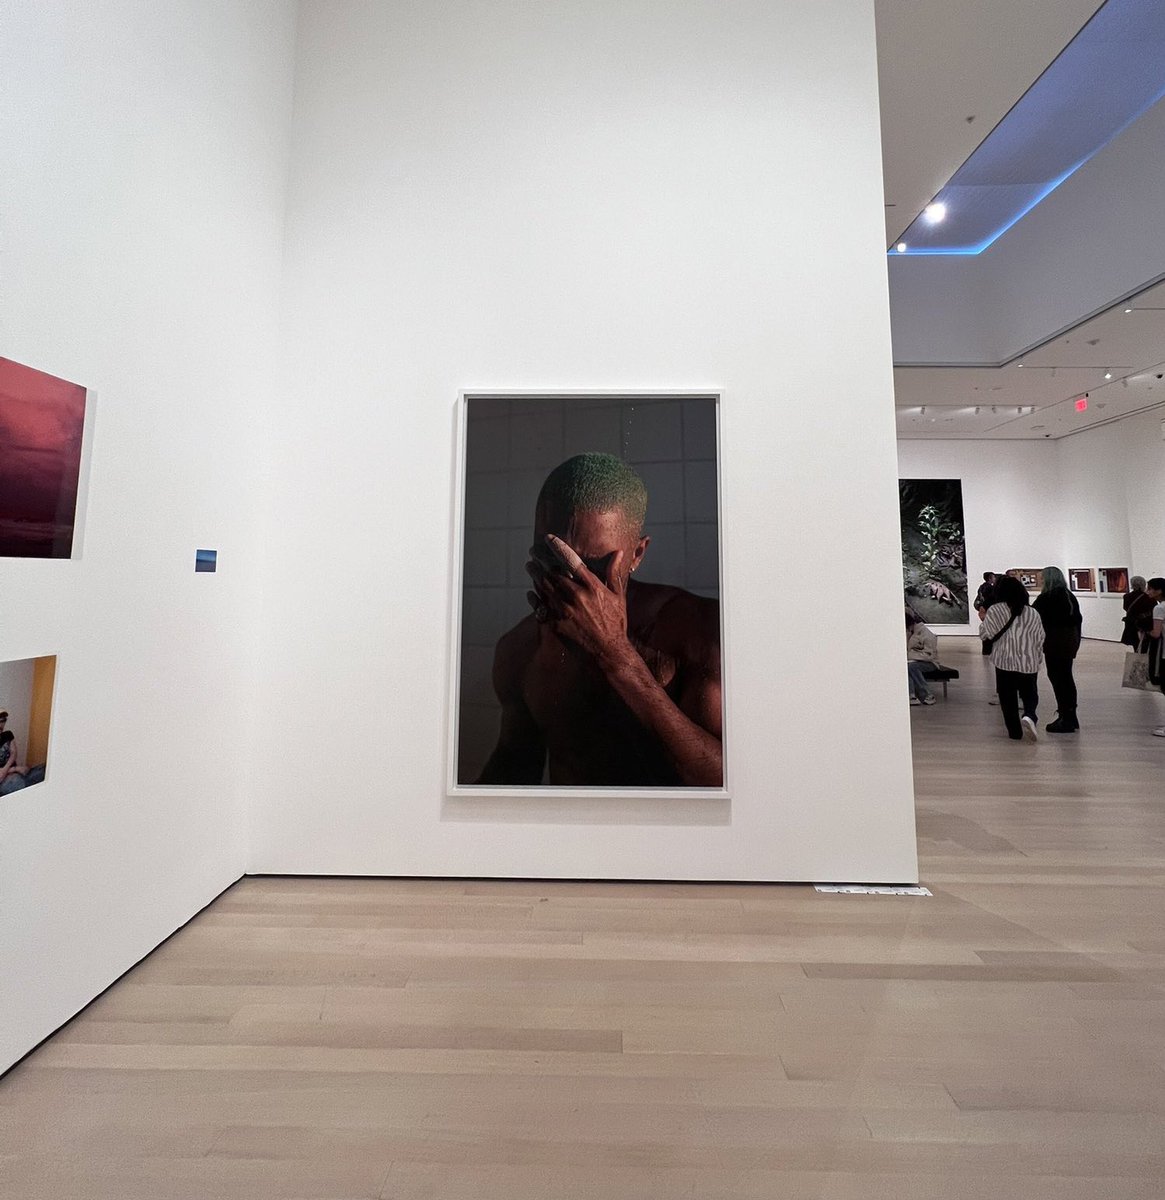 Frank Ocean’s “Blonde” in the prestigious Museum of Modern Art